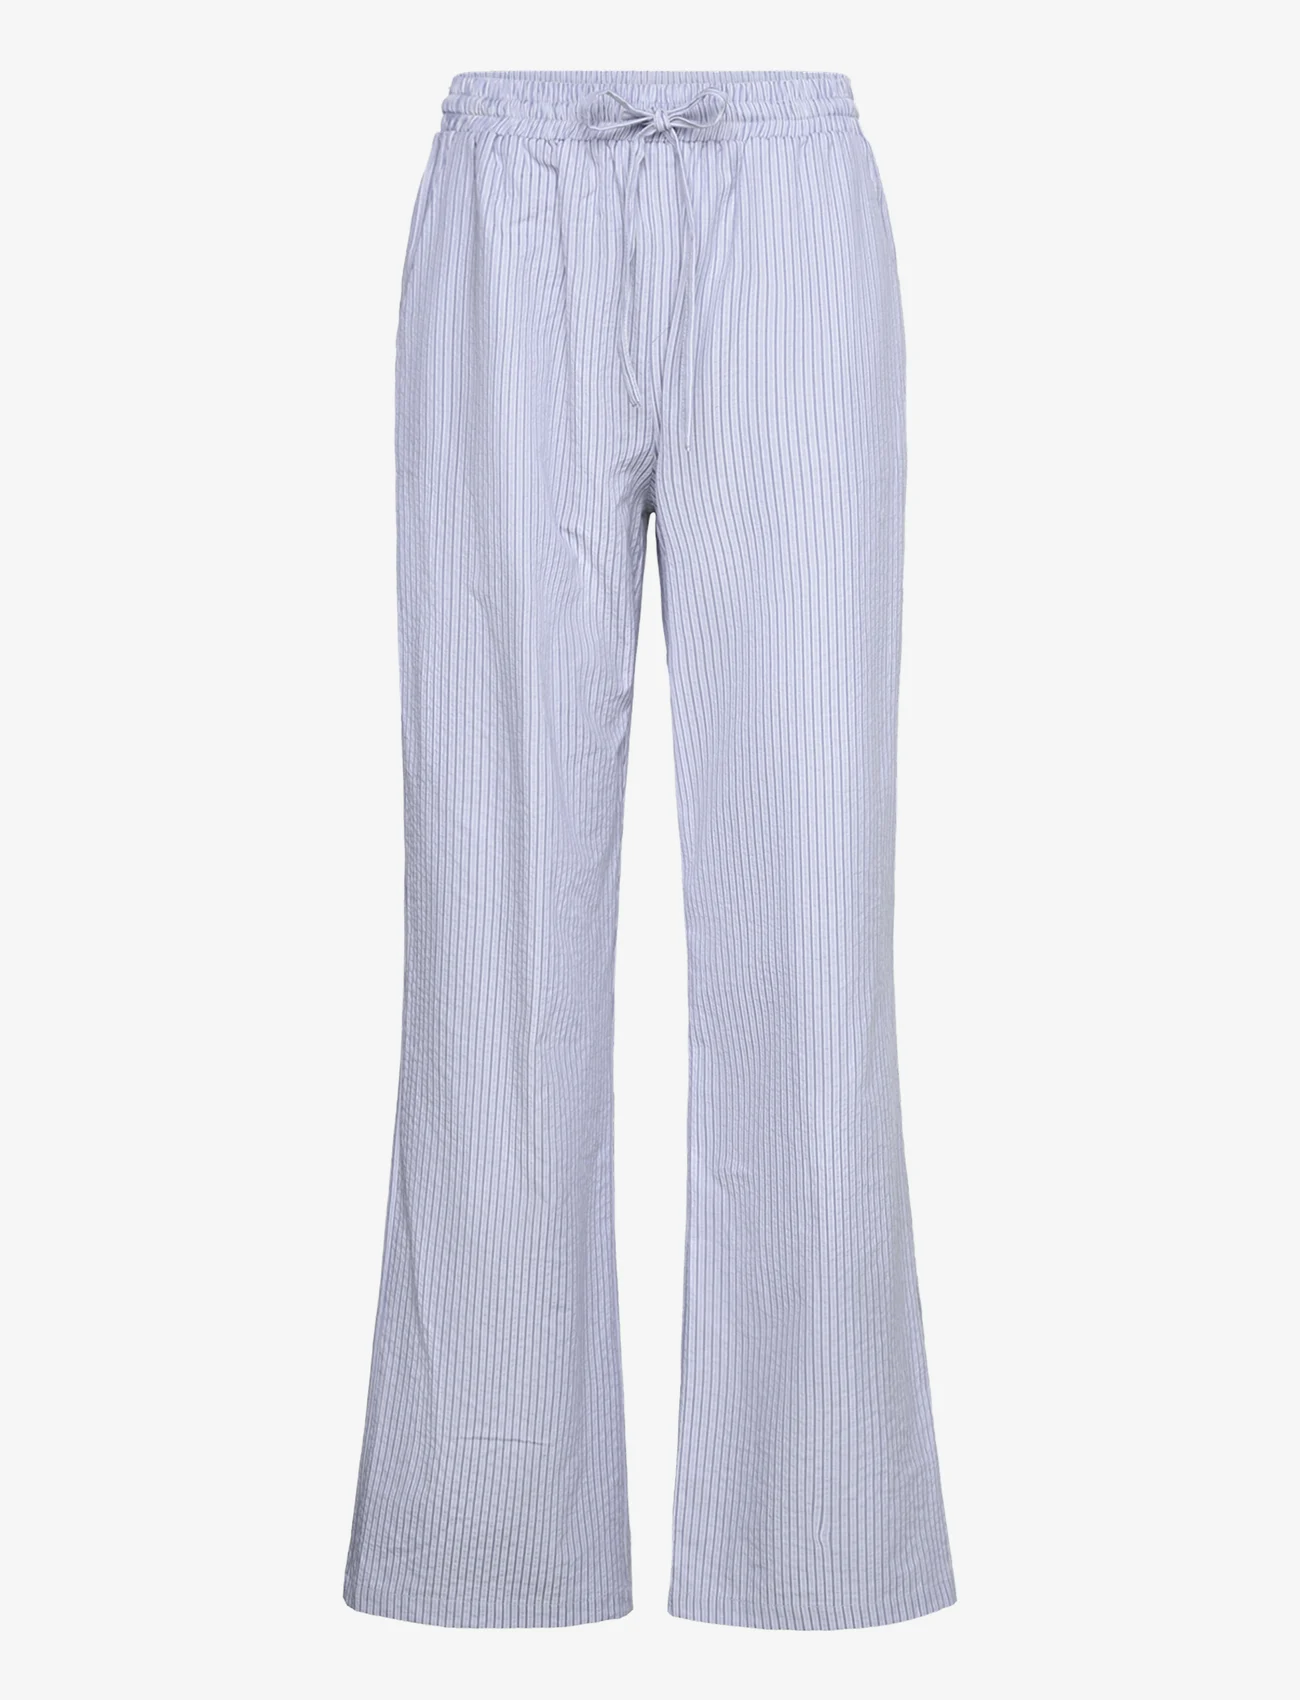 Noella - Rani Pants - leveälahkeiset housut - light blue stripe - 0